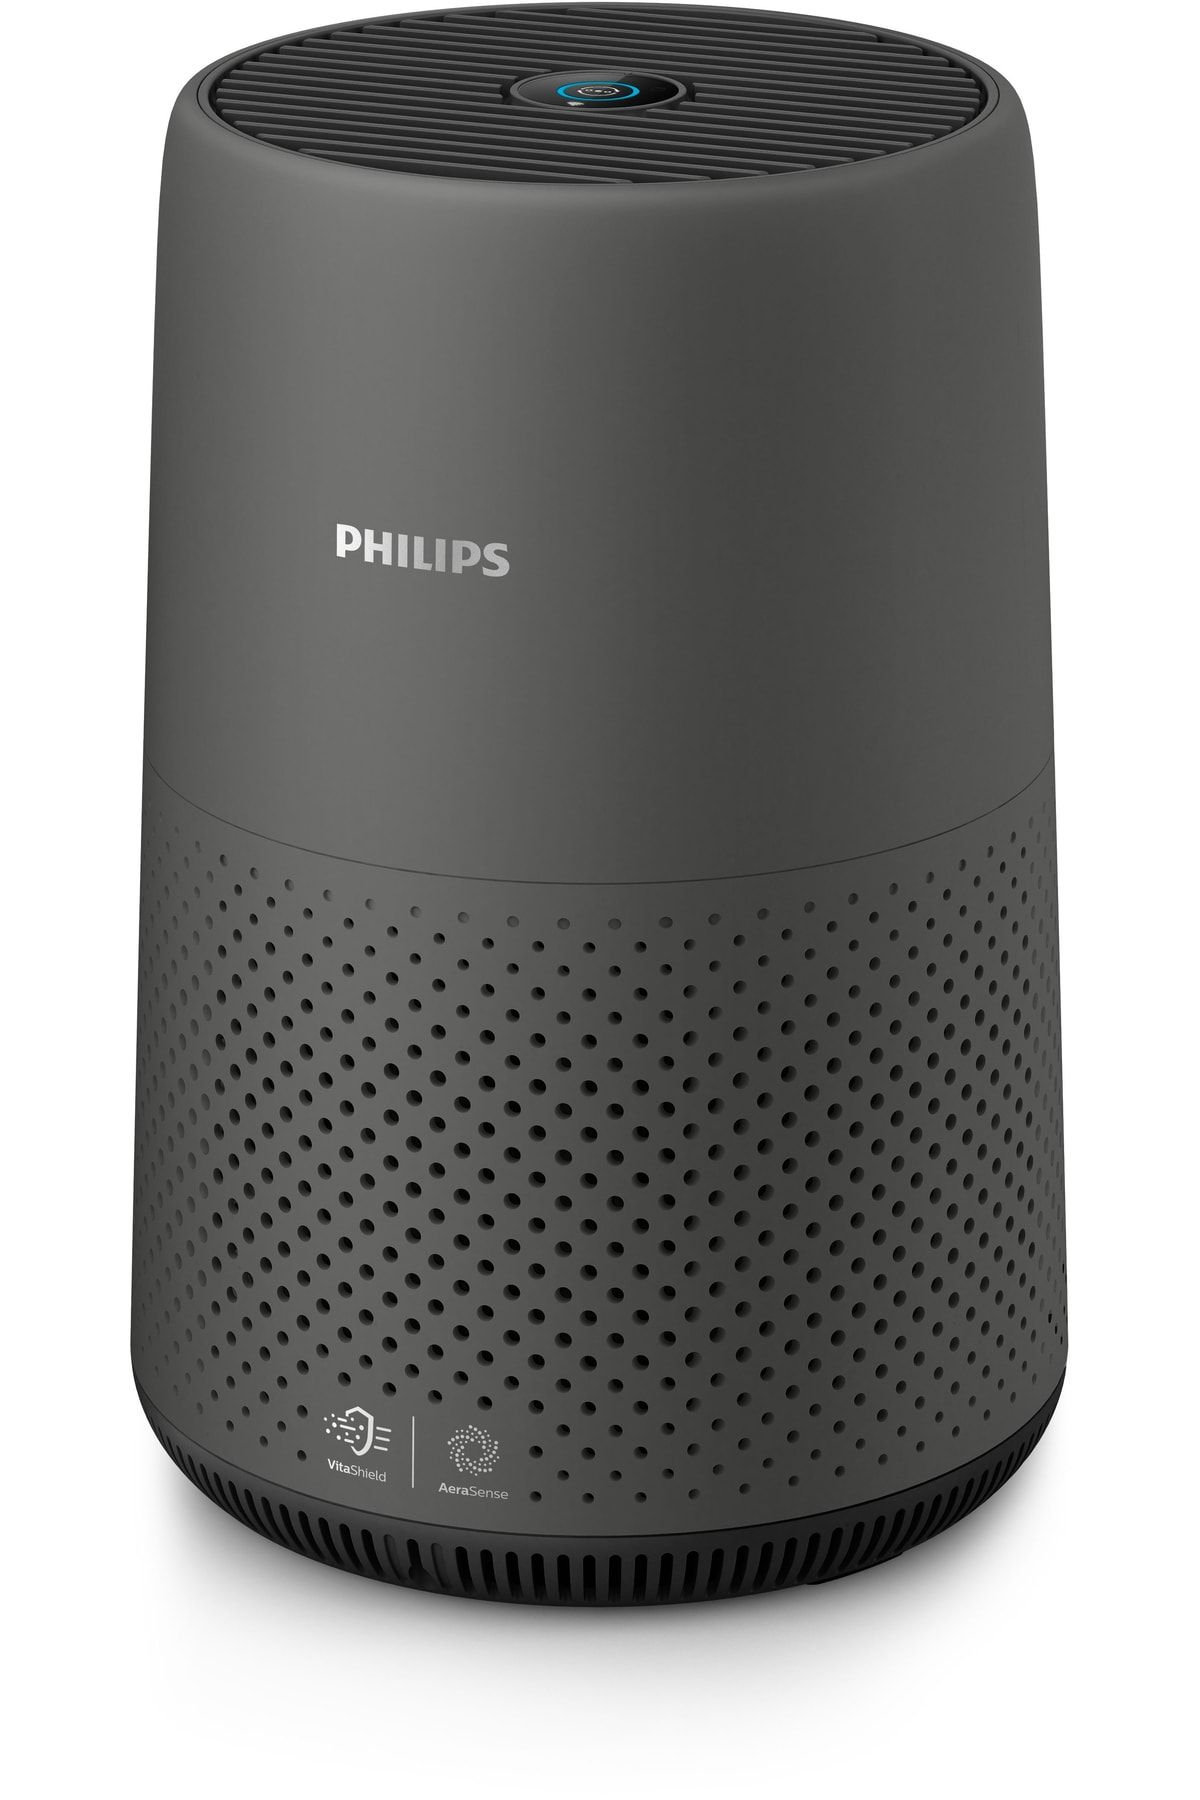 Philips Ac0850/11 800i Serisi Hava Temizleyici